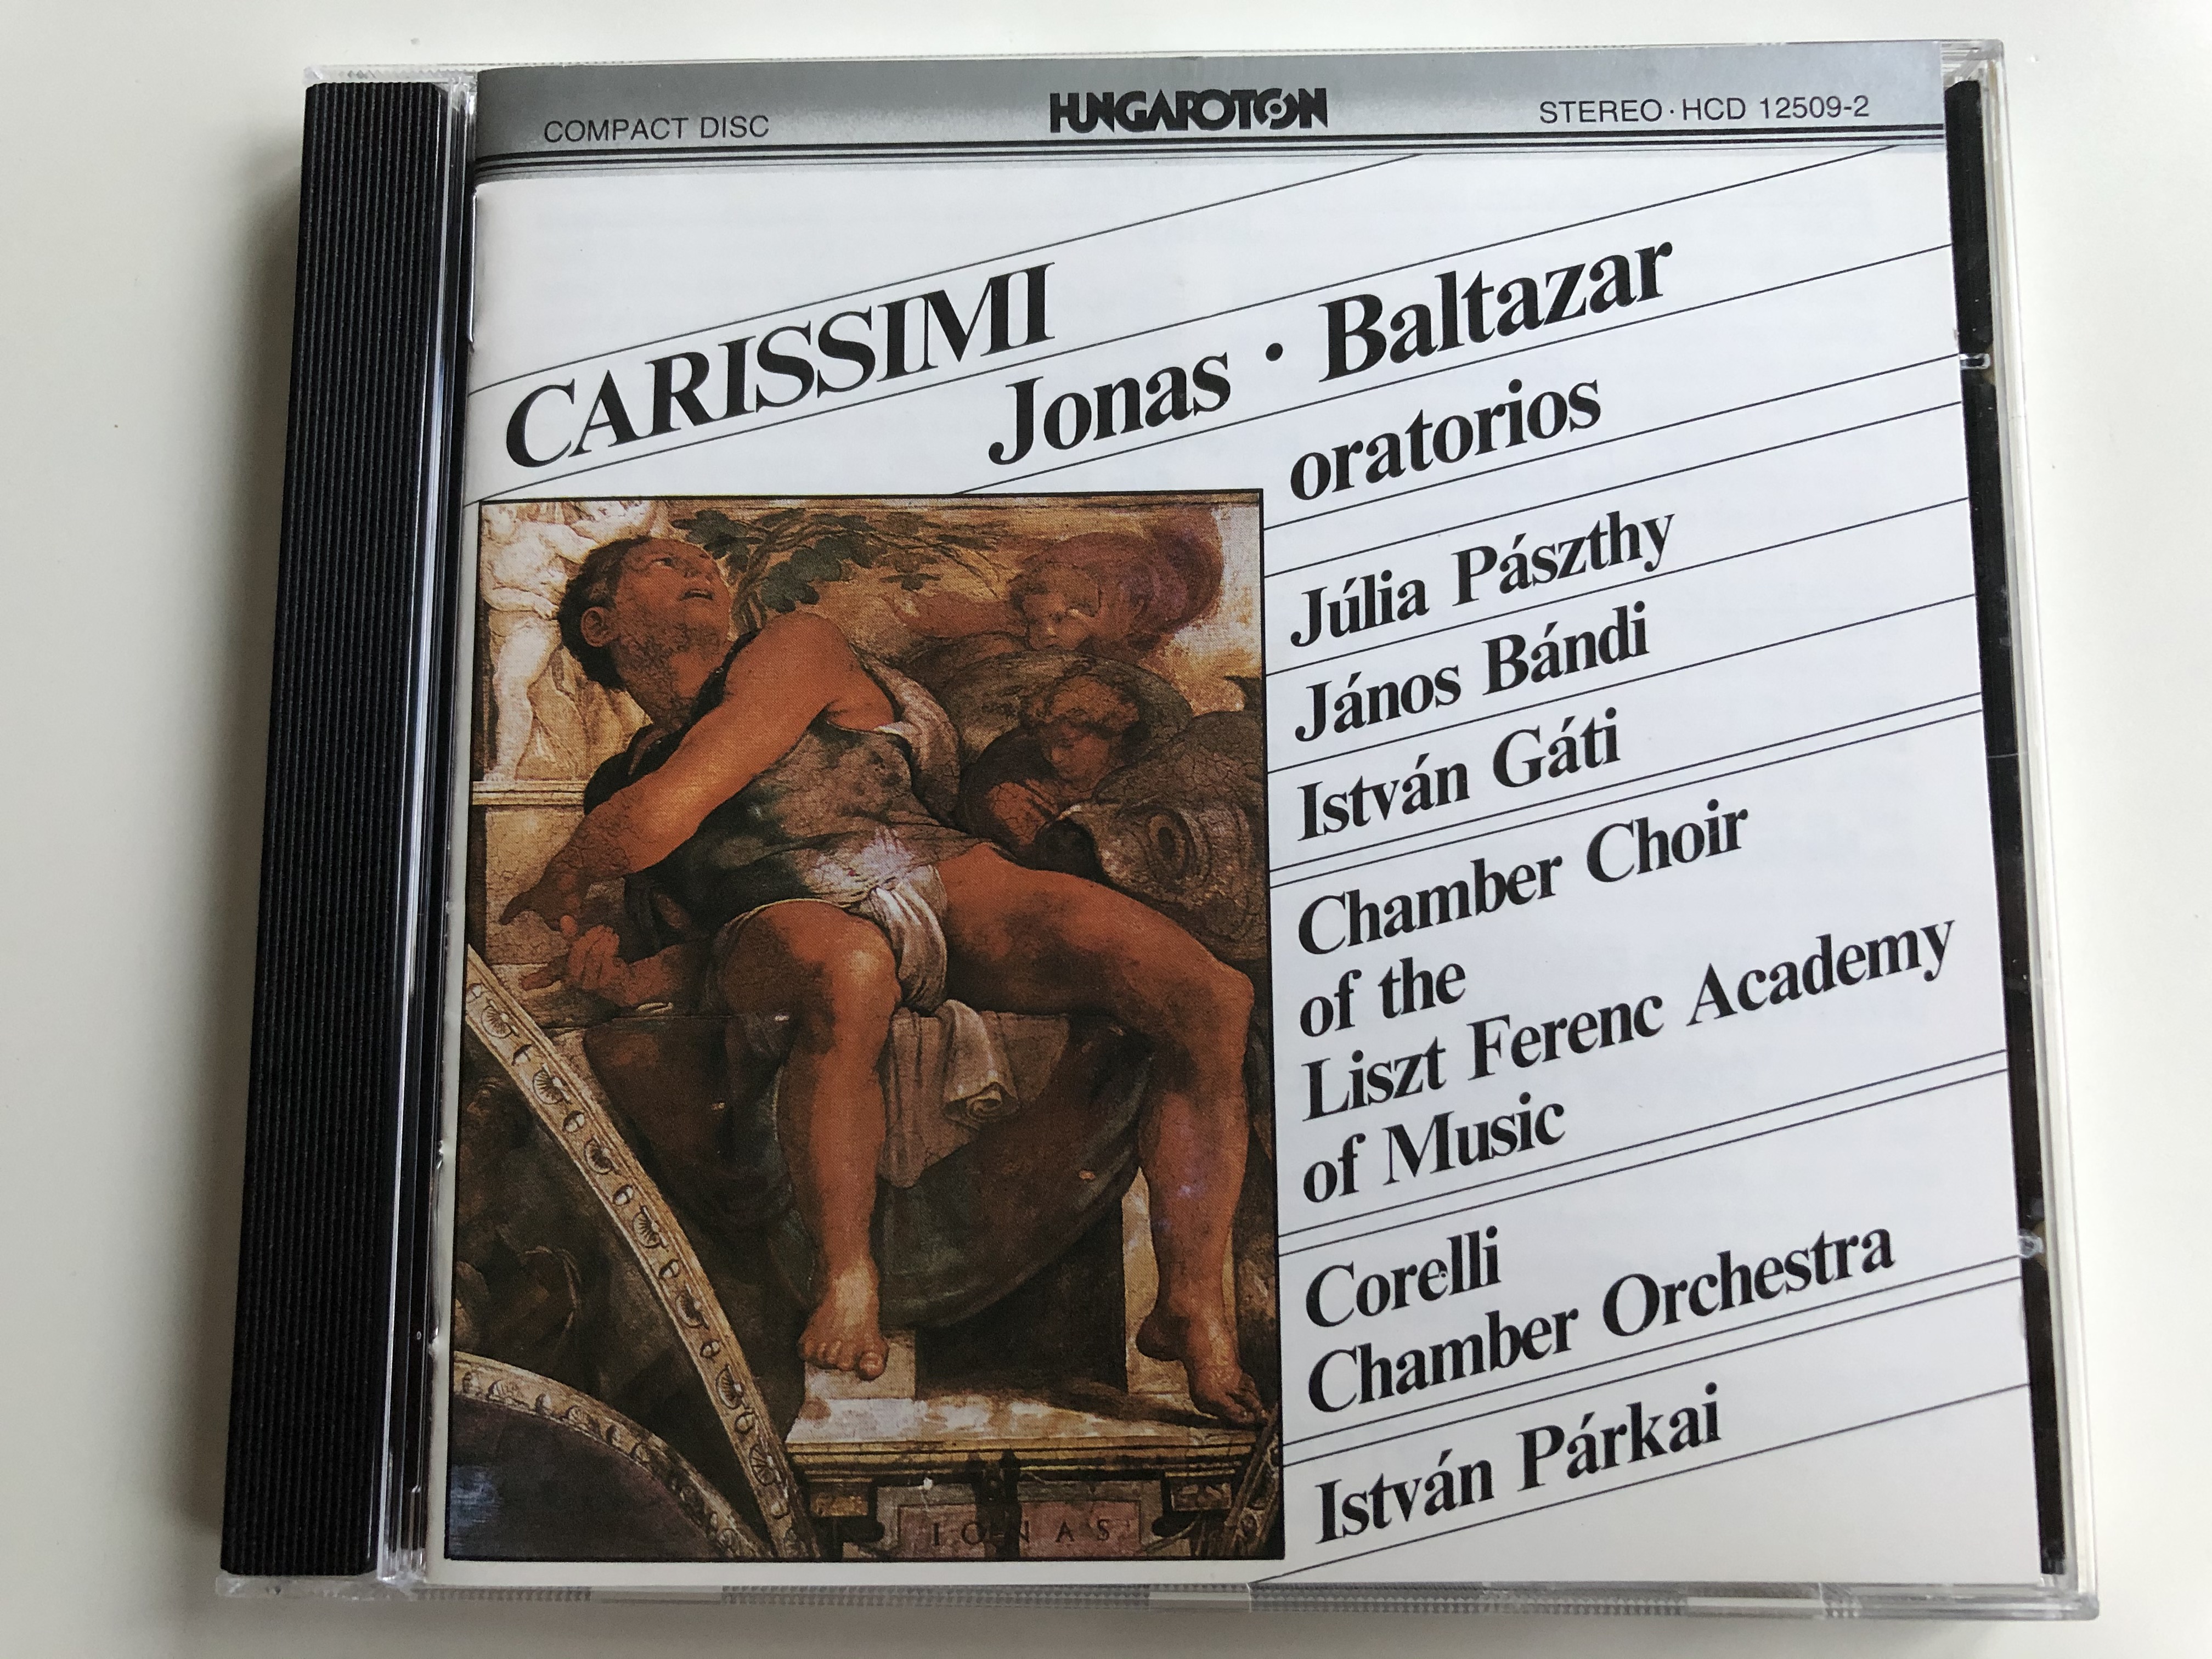 carissimi-jonas-baltazar-oratorios-j-nos-paszthy-j-nos-b-ndi-istv-n-g-ti-chamber-chorus-of-the-liszt-ferenc-academy-of-music-corelli-chamber-orchestra-istv-n-p-rkai-hungaroton-audio-1-.jpg